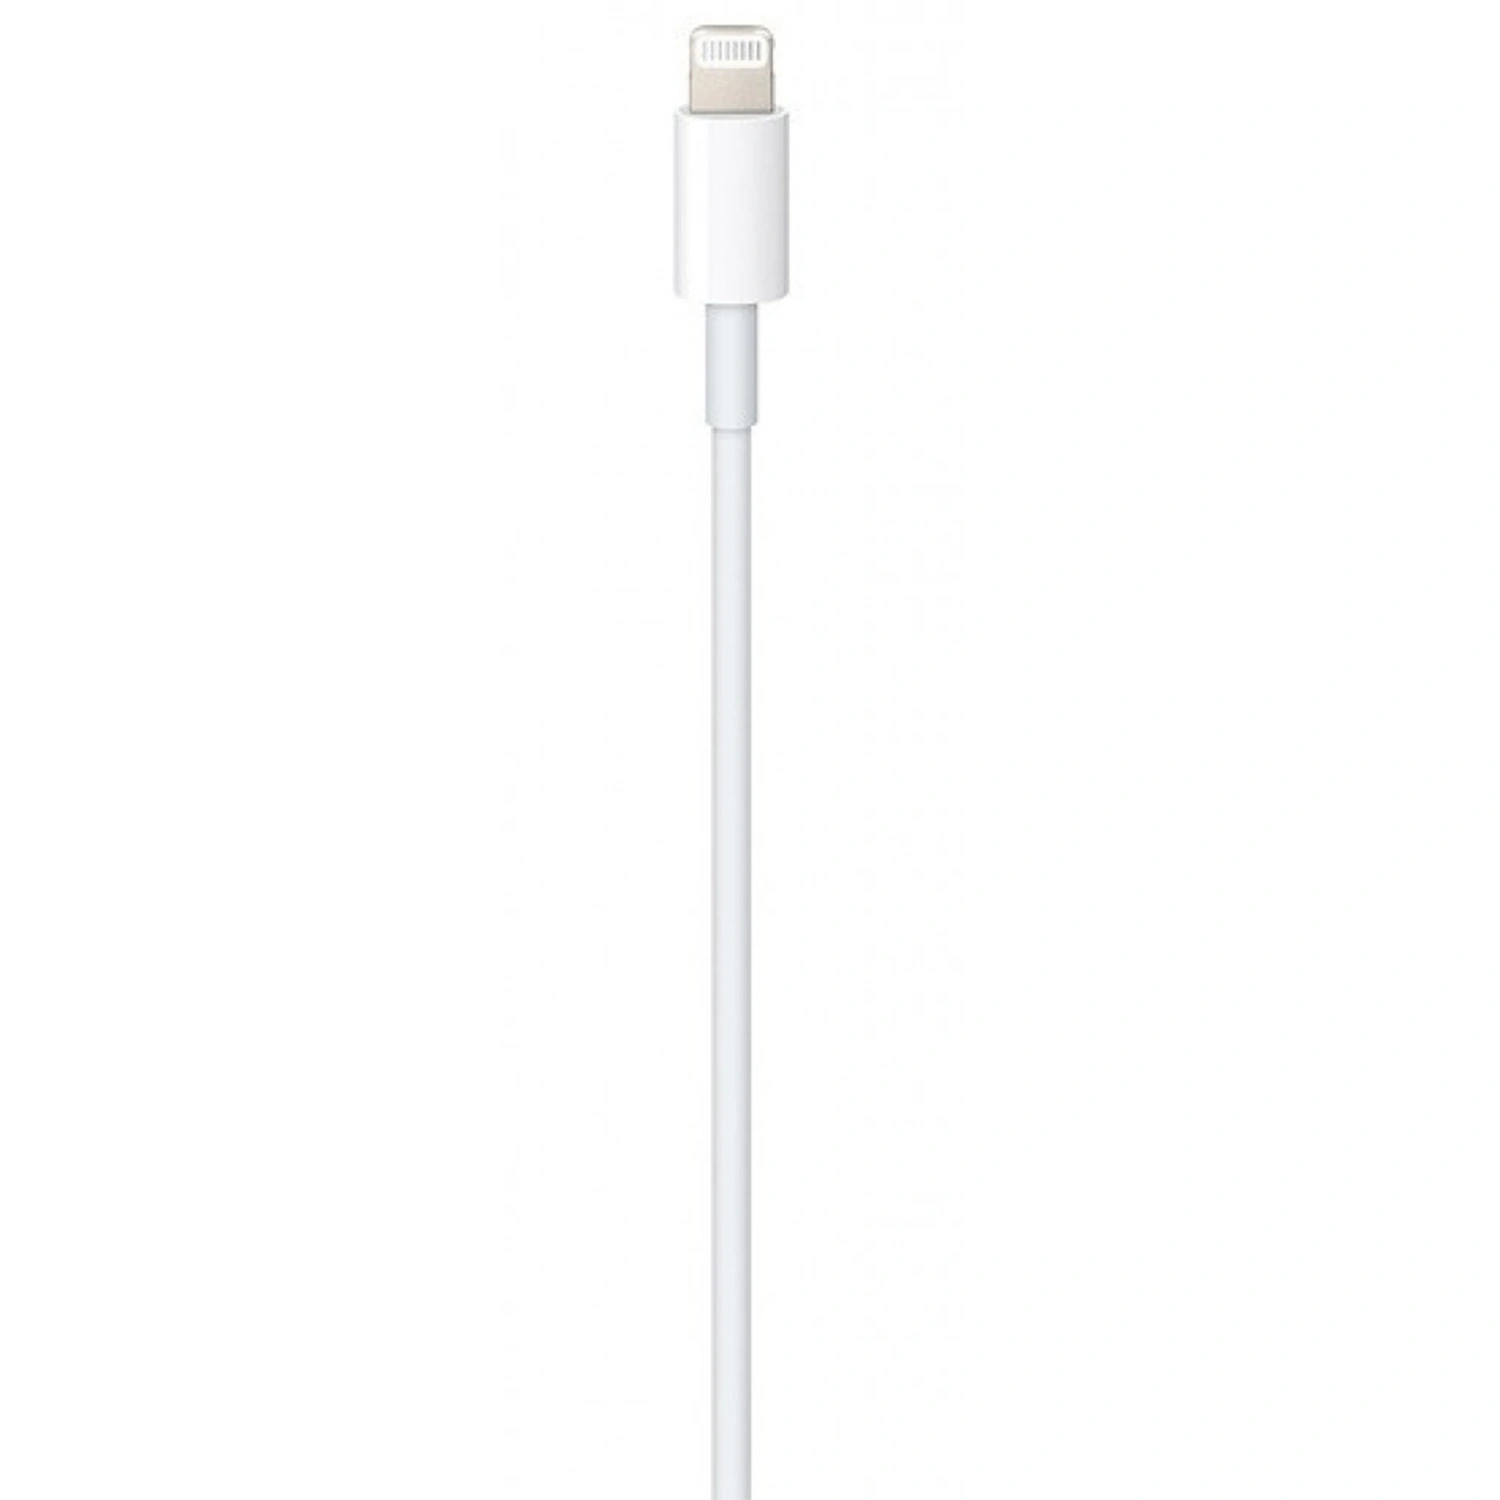 Apple iphone lightning. Кабель Apple USB Type-c - Lightning (mqgj2zm/a) 1 м. Apple кабель USB-C/Lightning 2 м. Кабель Apple USB - Lightning mxly2zm/a (1 метр). Кабель Apple USB - Lightning (md819zm/a) 2 м.